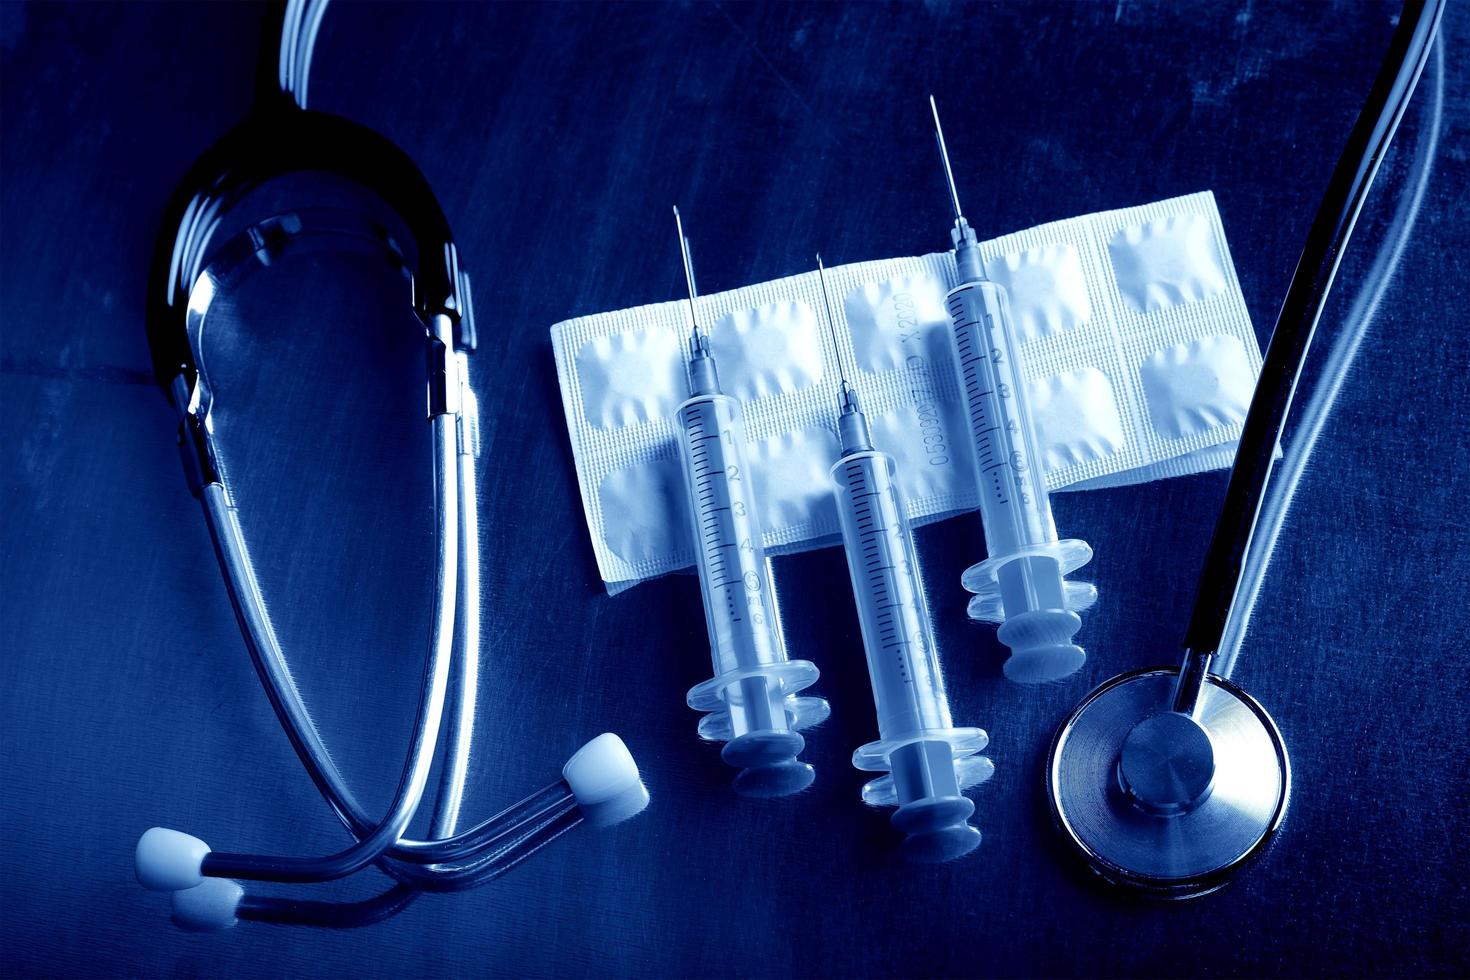 Medical equipment in blue monochrome photo